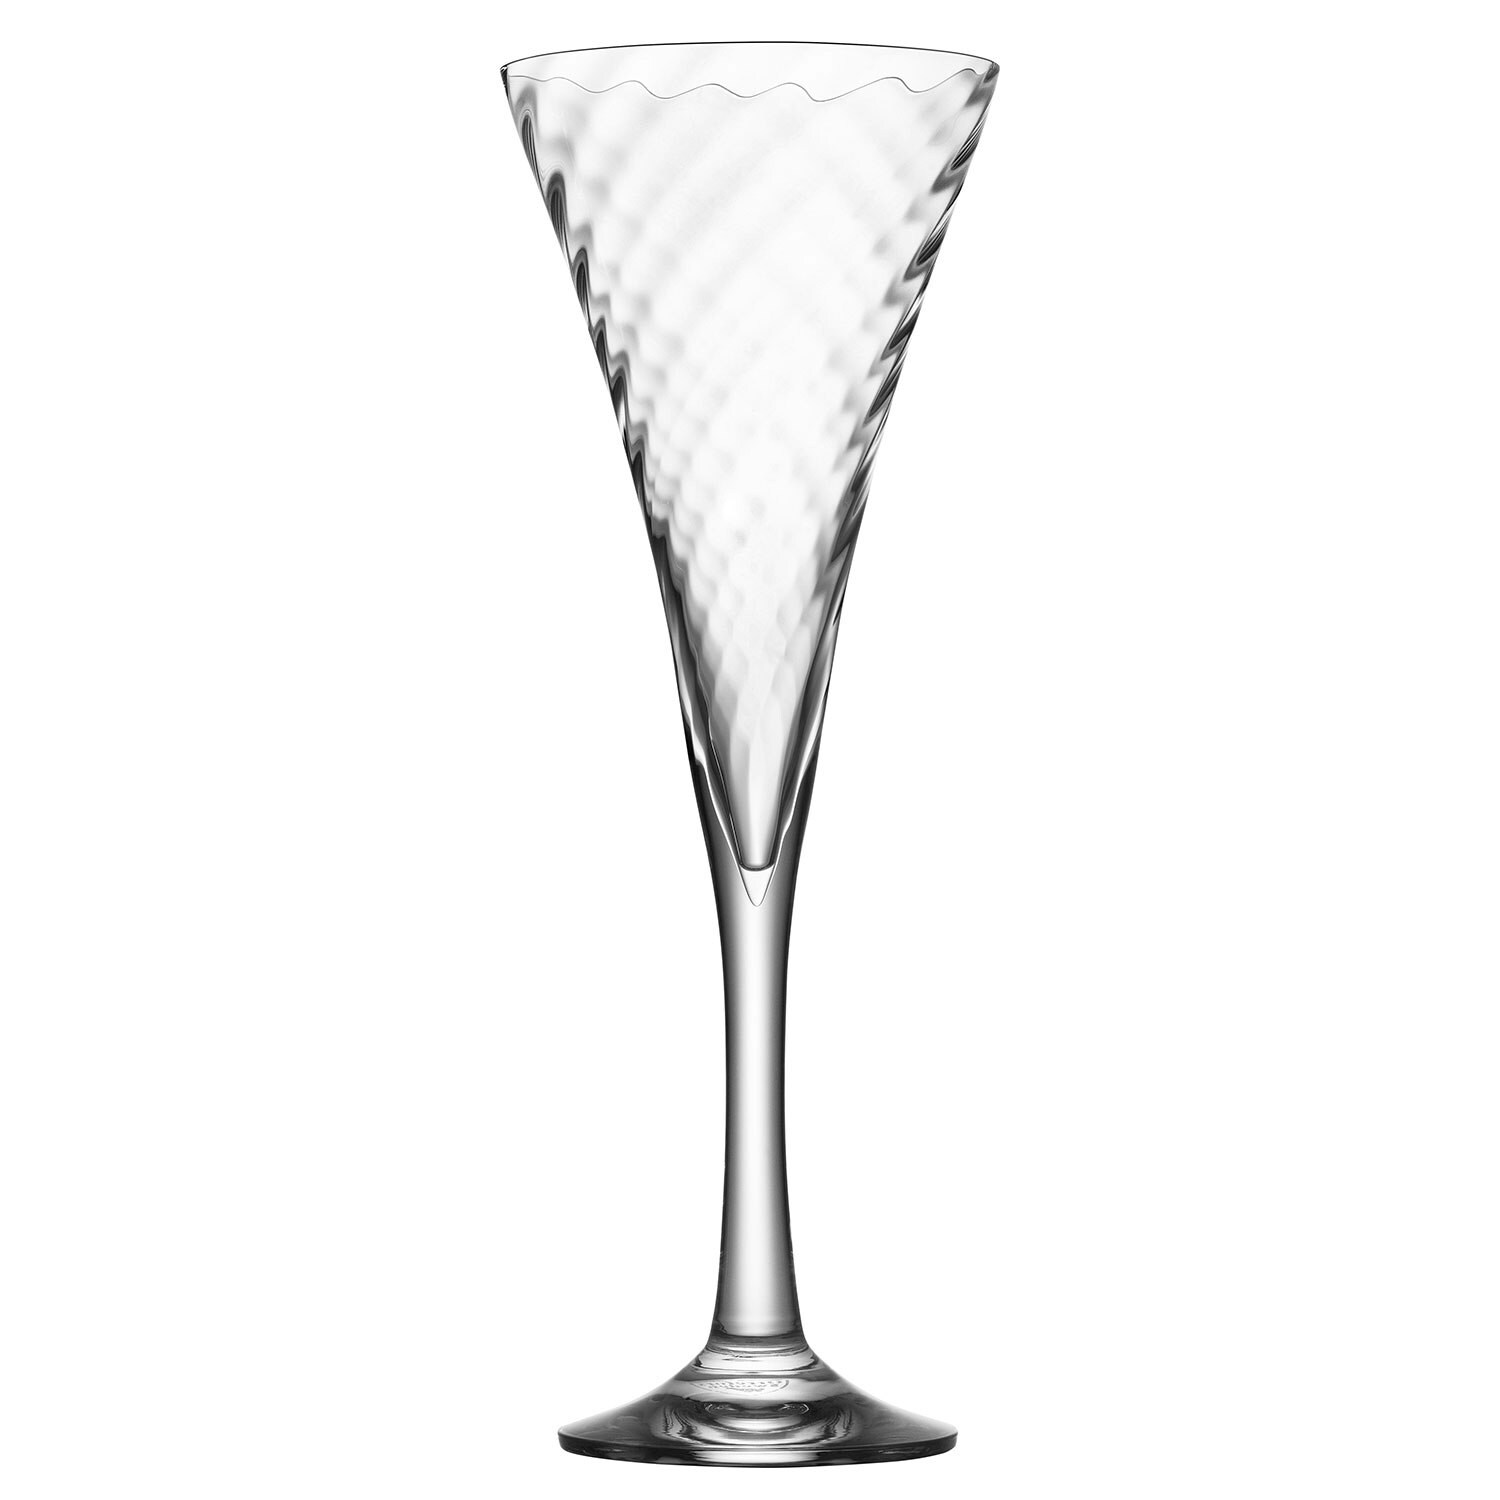 https://royaldesign.com/image/2/orrefors-helena-champagne-glass-set-of-4-0